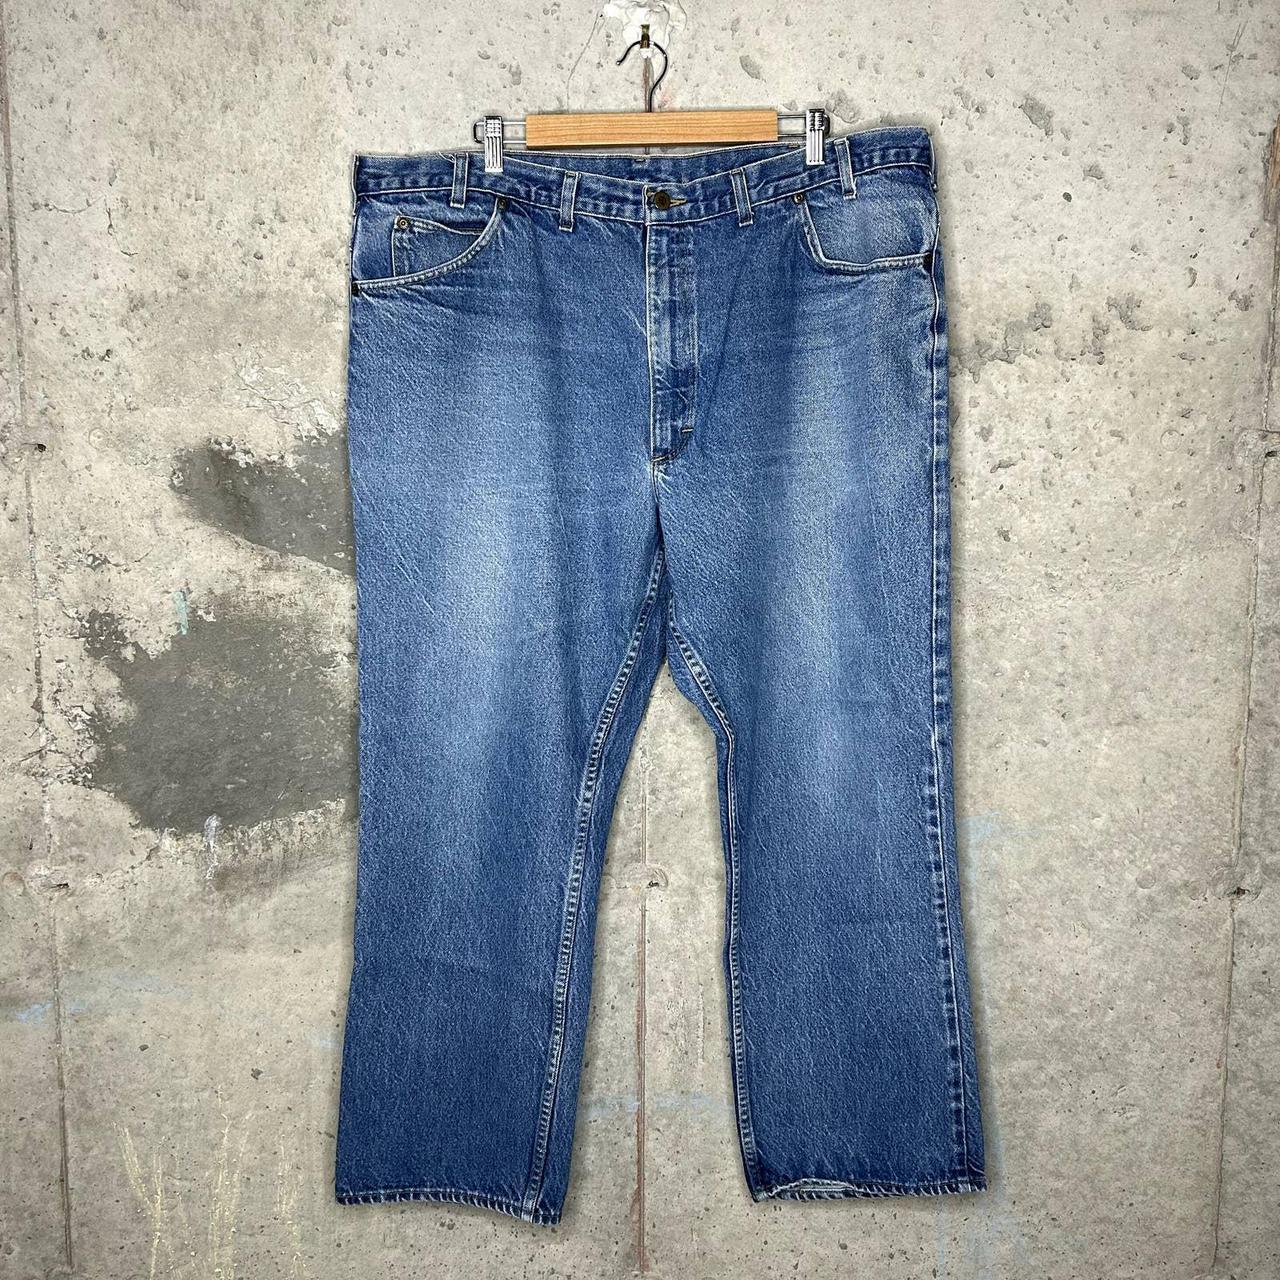 Oshkosh Midwash Denim Jeans (Good... - Depop